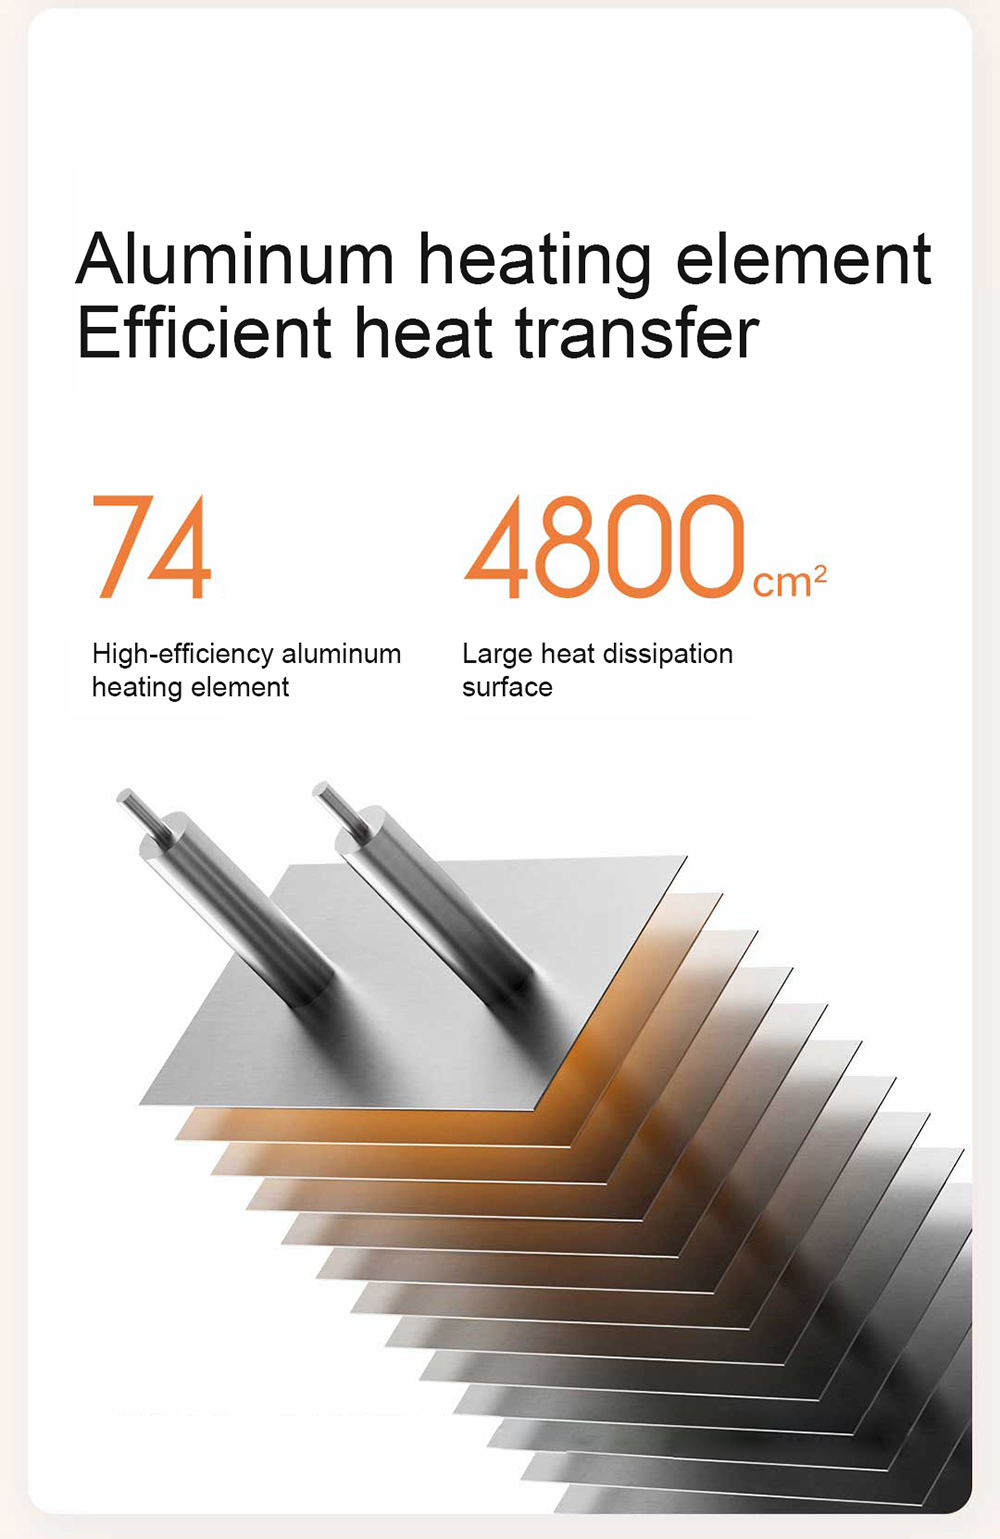 Aluminum heating element efficient heat transfer